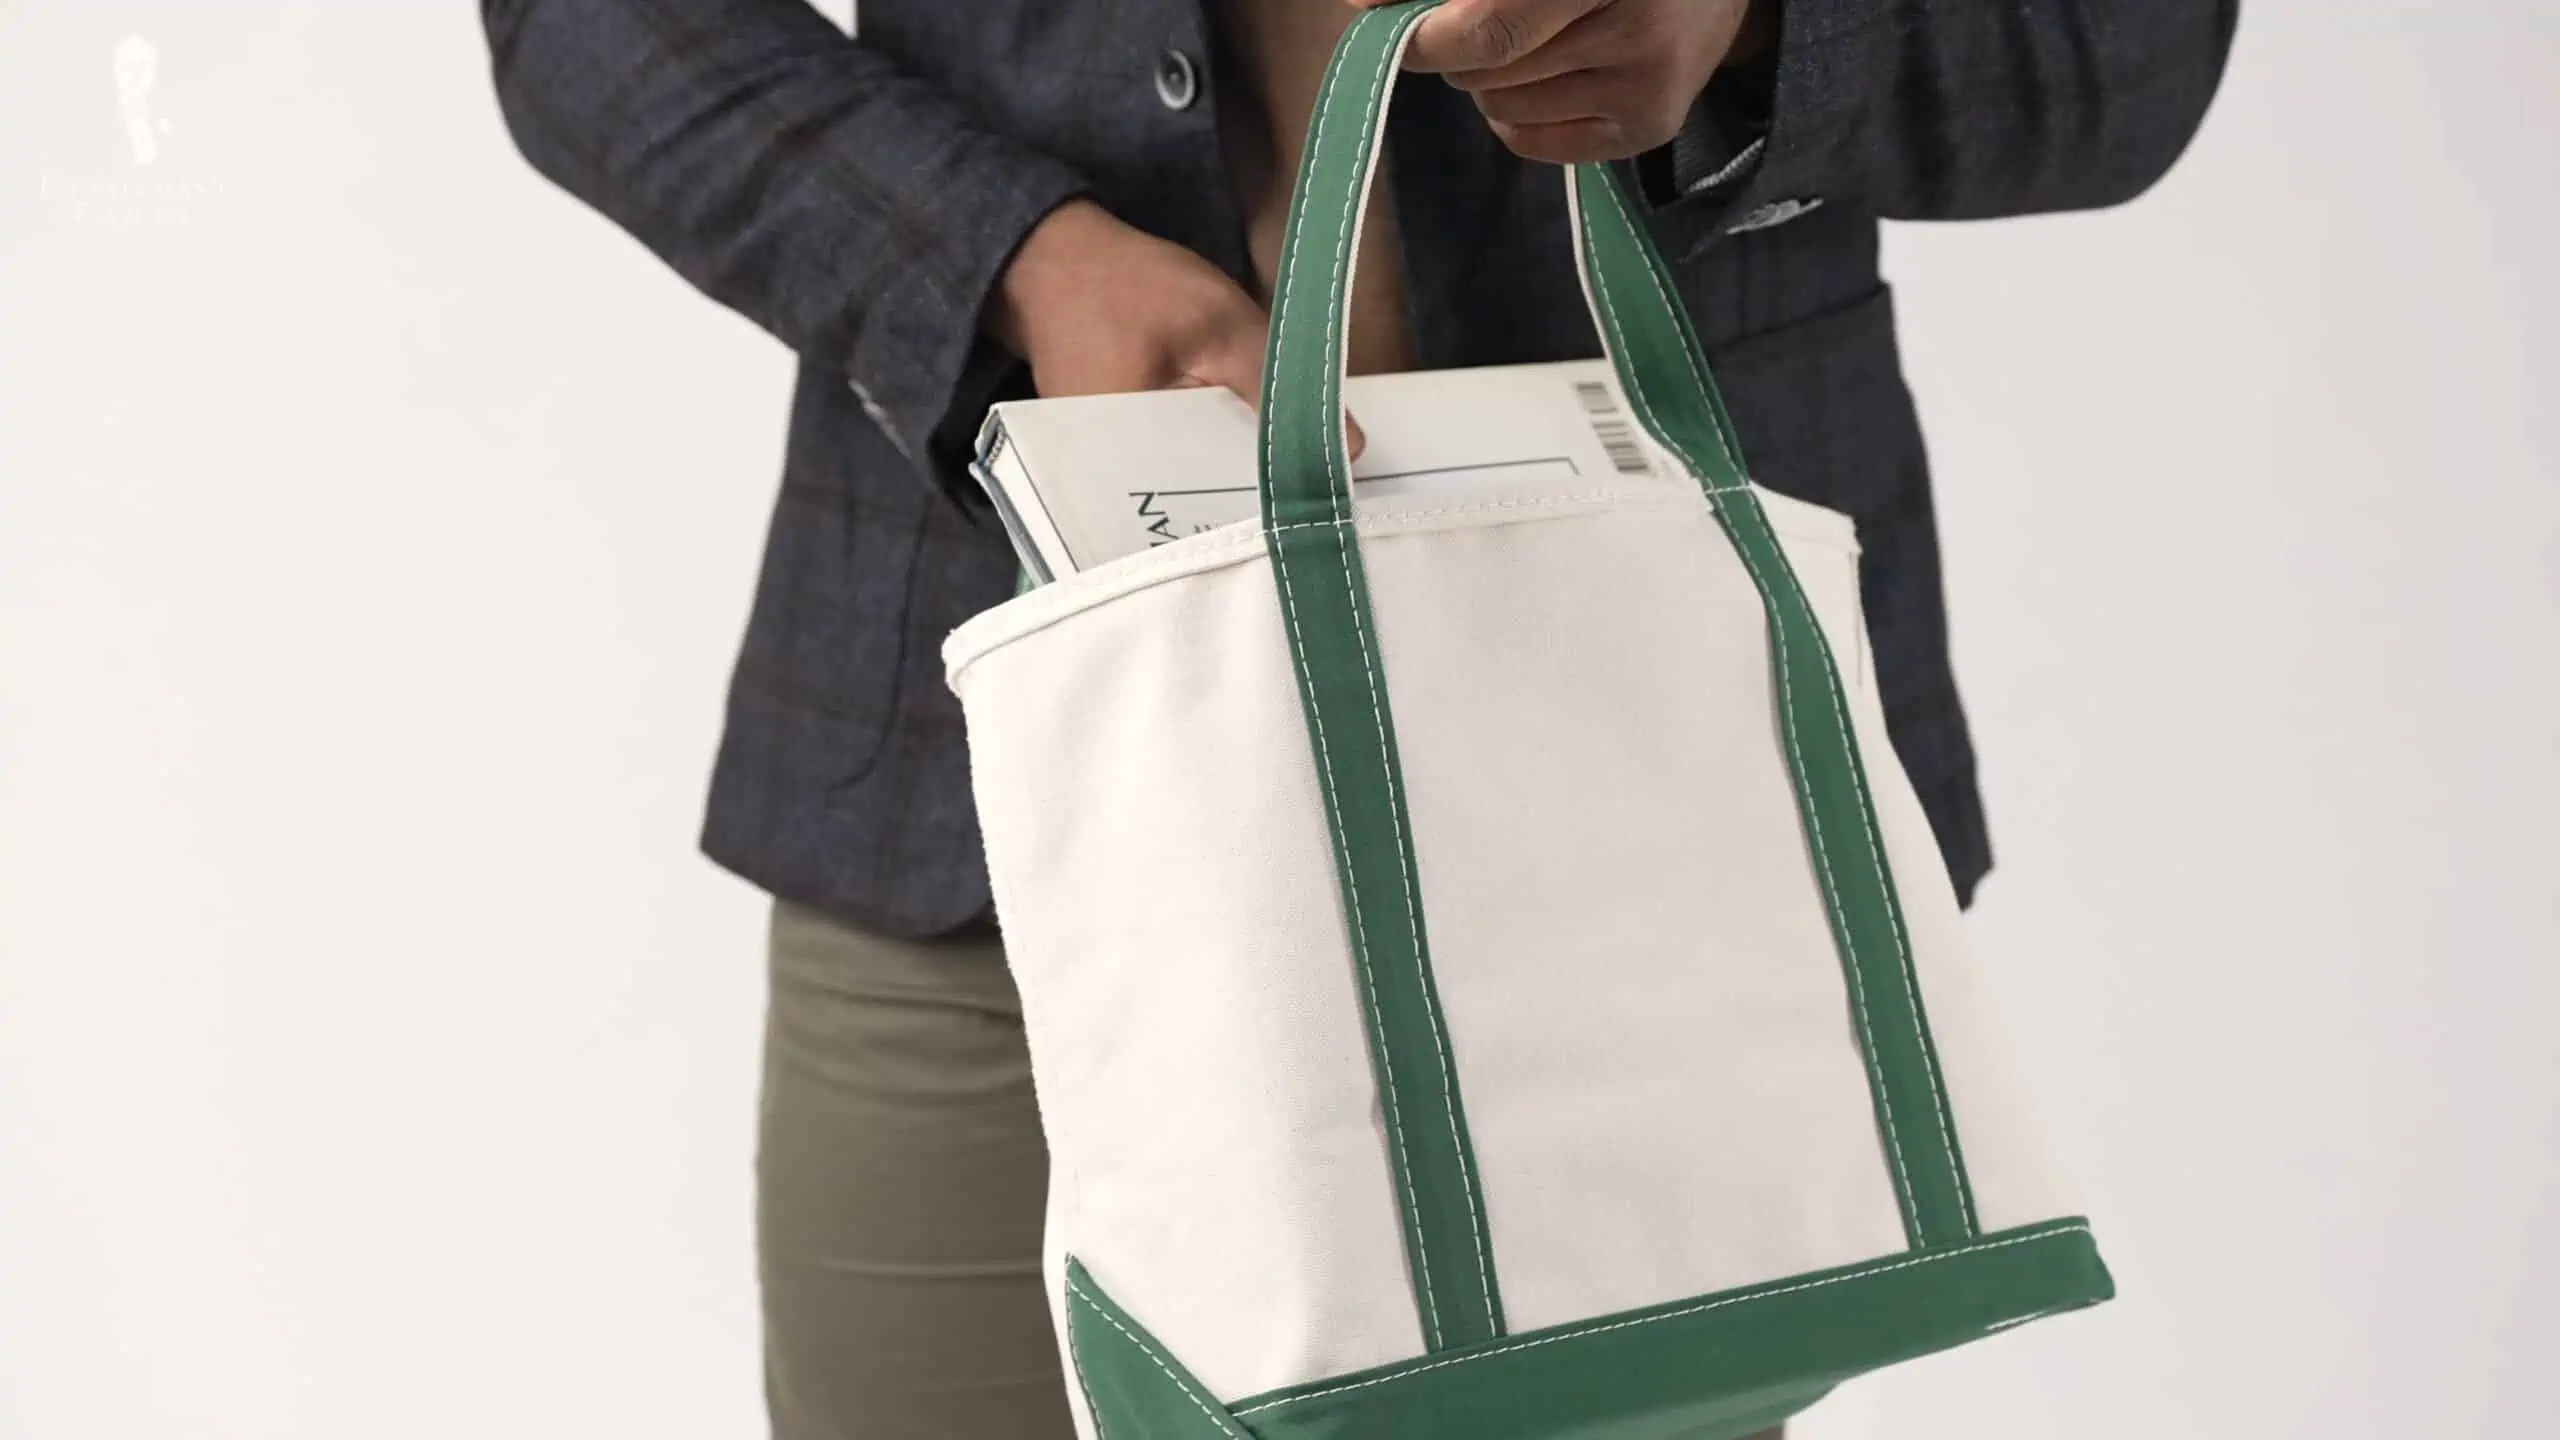 Luxury Designer Laptop Bags - Work Bags for Women, Men